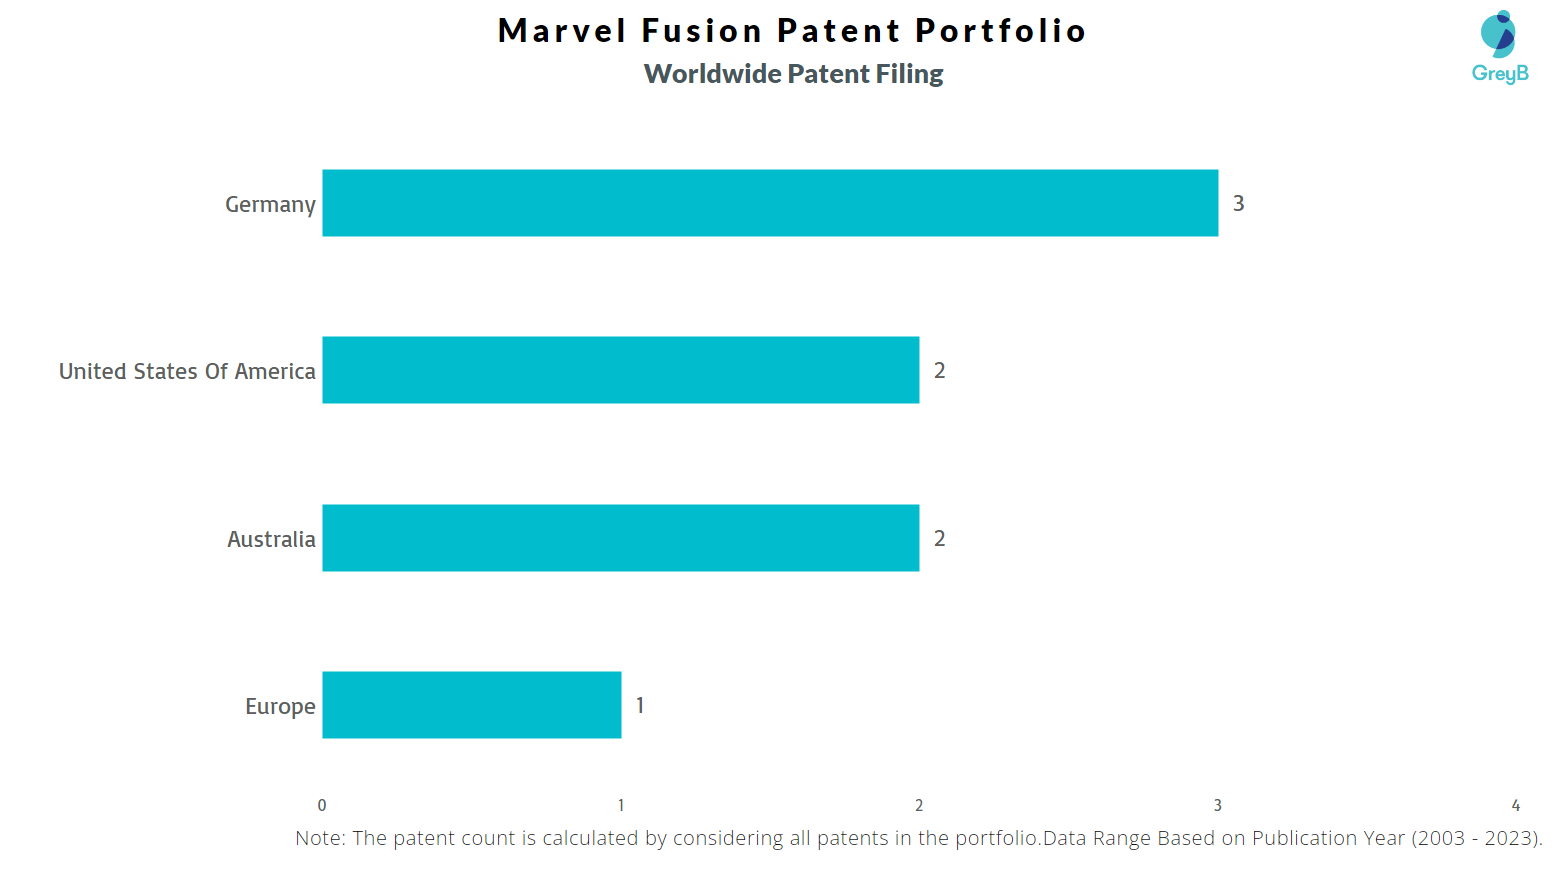 Marvel Fusion Worldwide Patent Filing